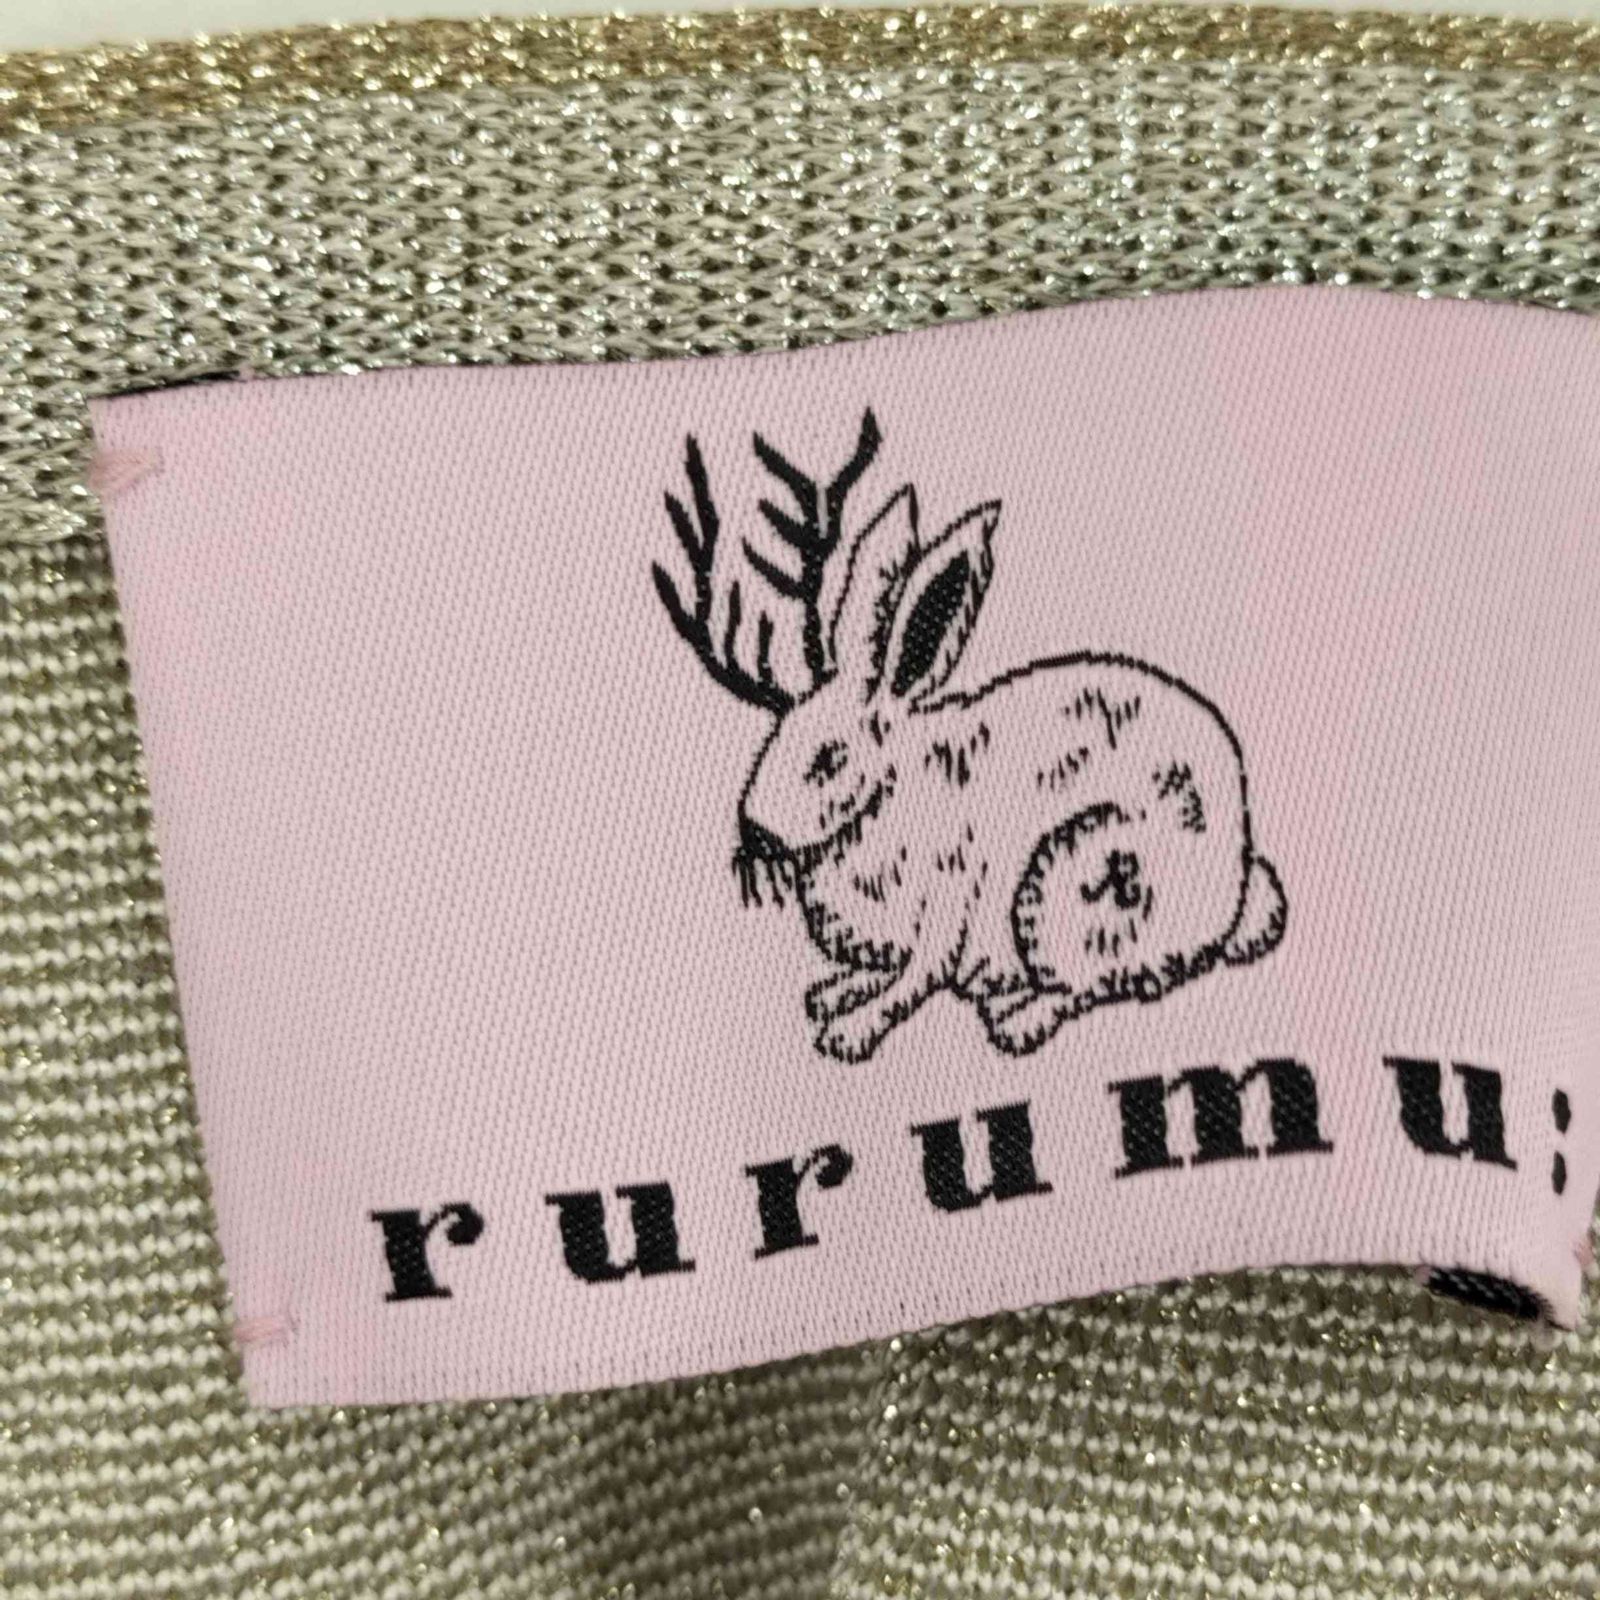 rurumu: A mon seul désir knit one-piece